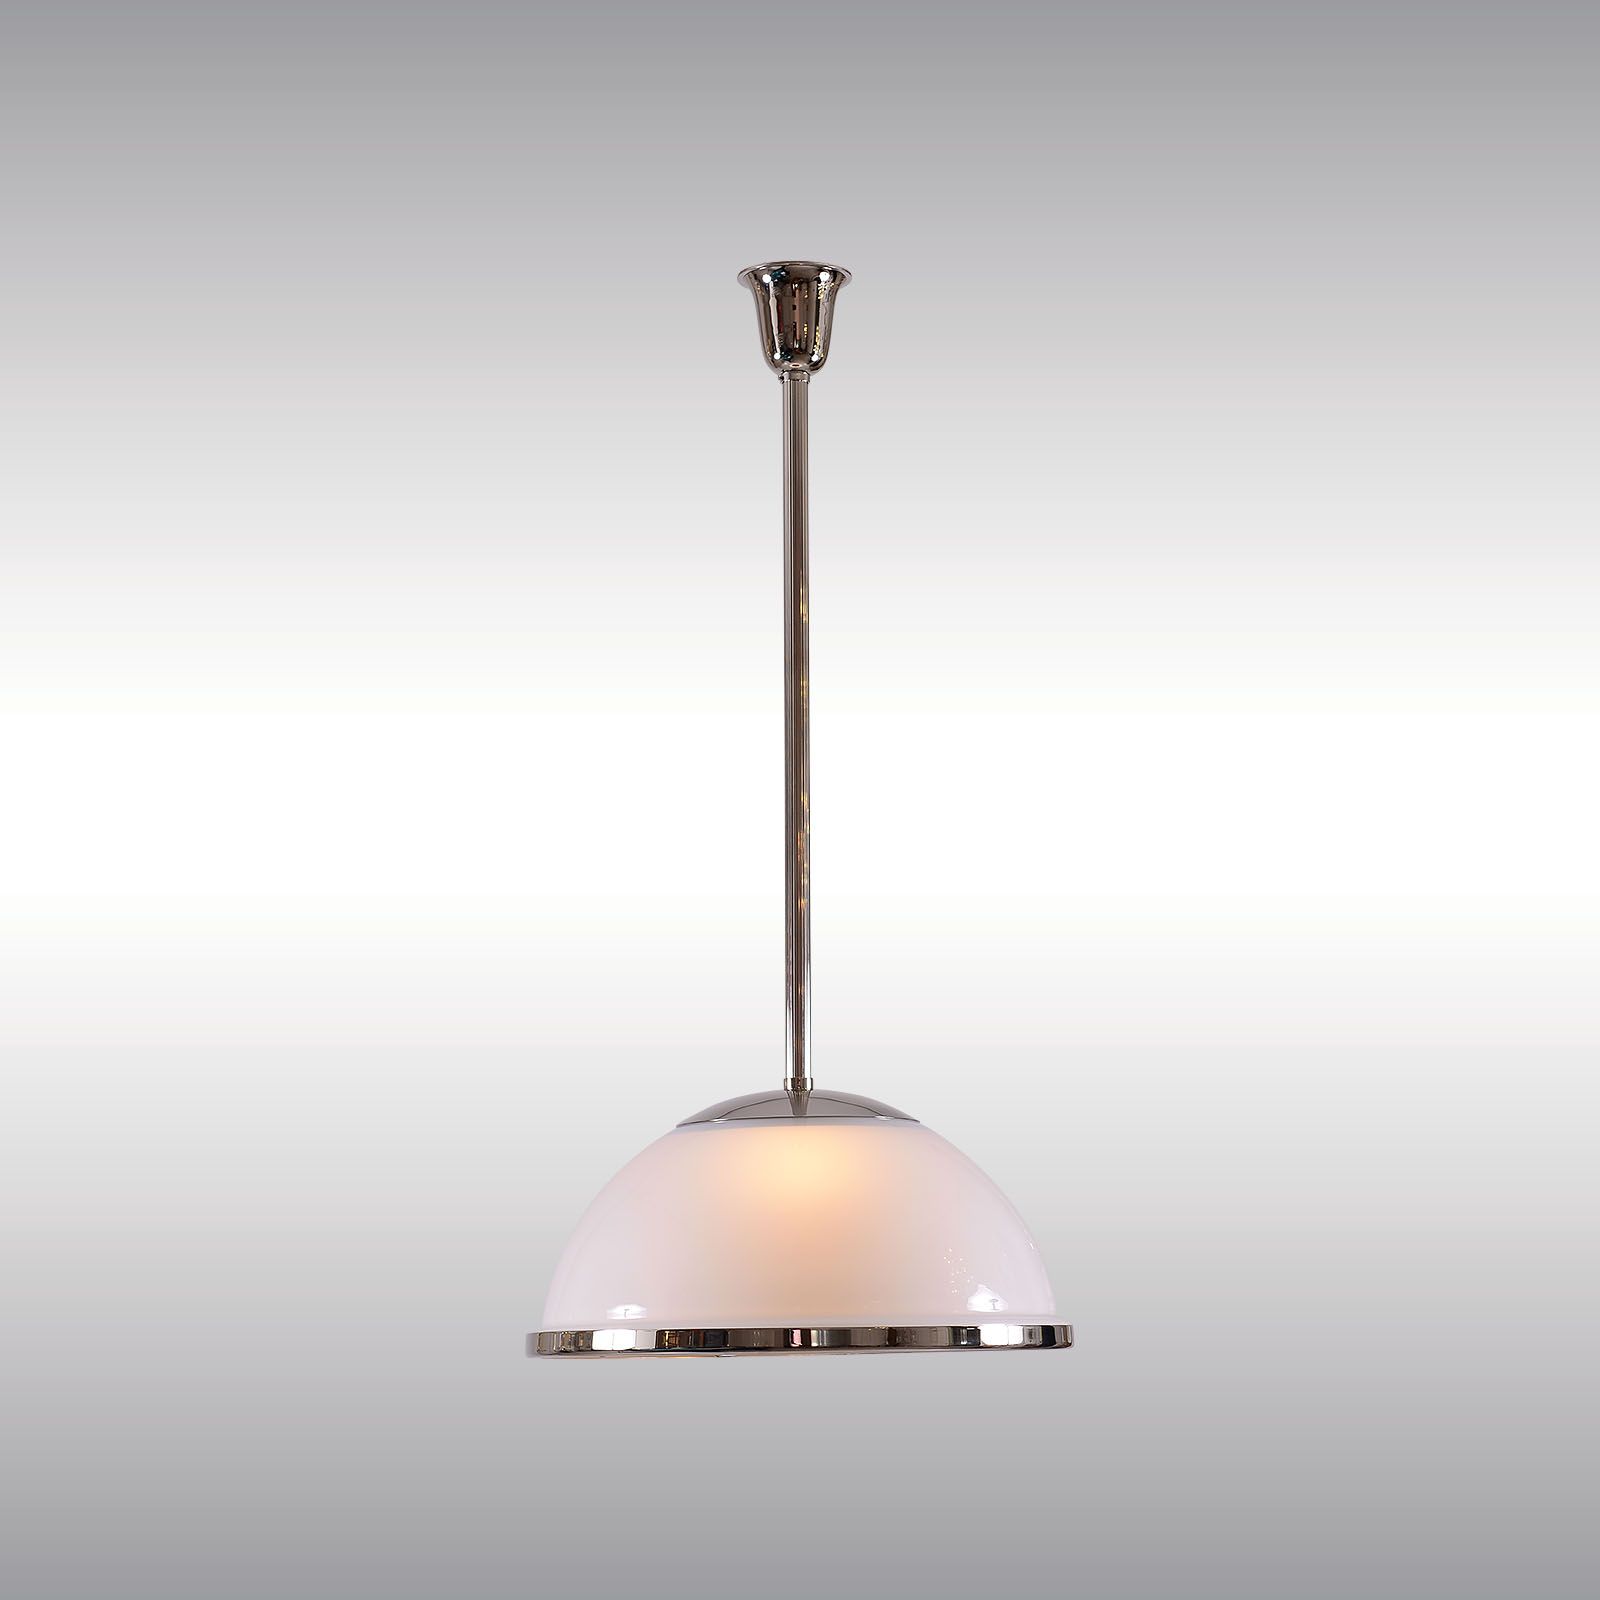 WOKA LAMPS VIENNA - OrderNr.: 27|LST4/50 - Design: Adolf Loos